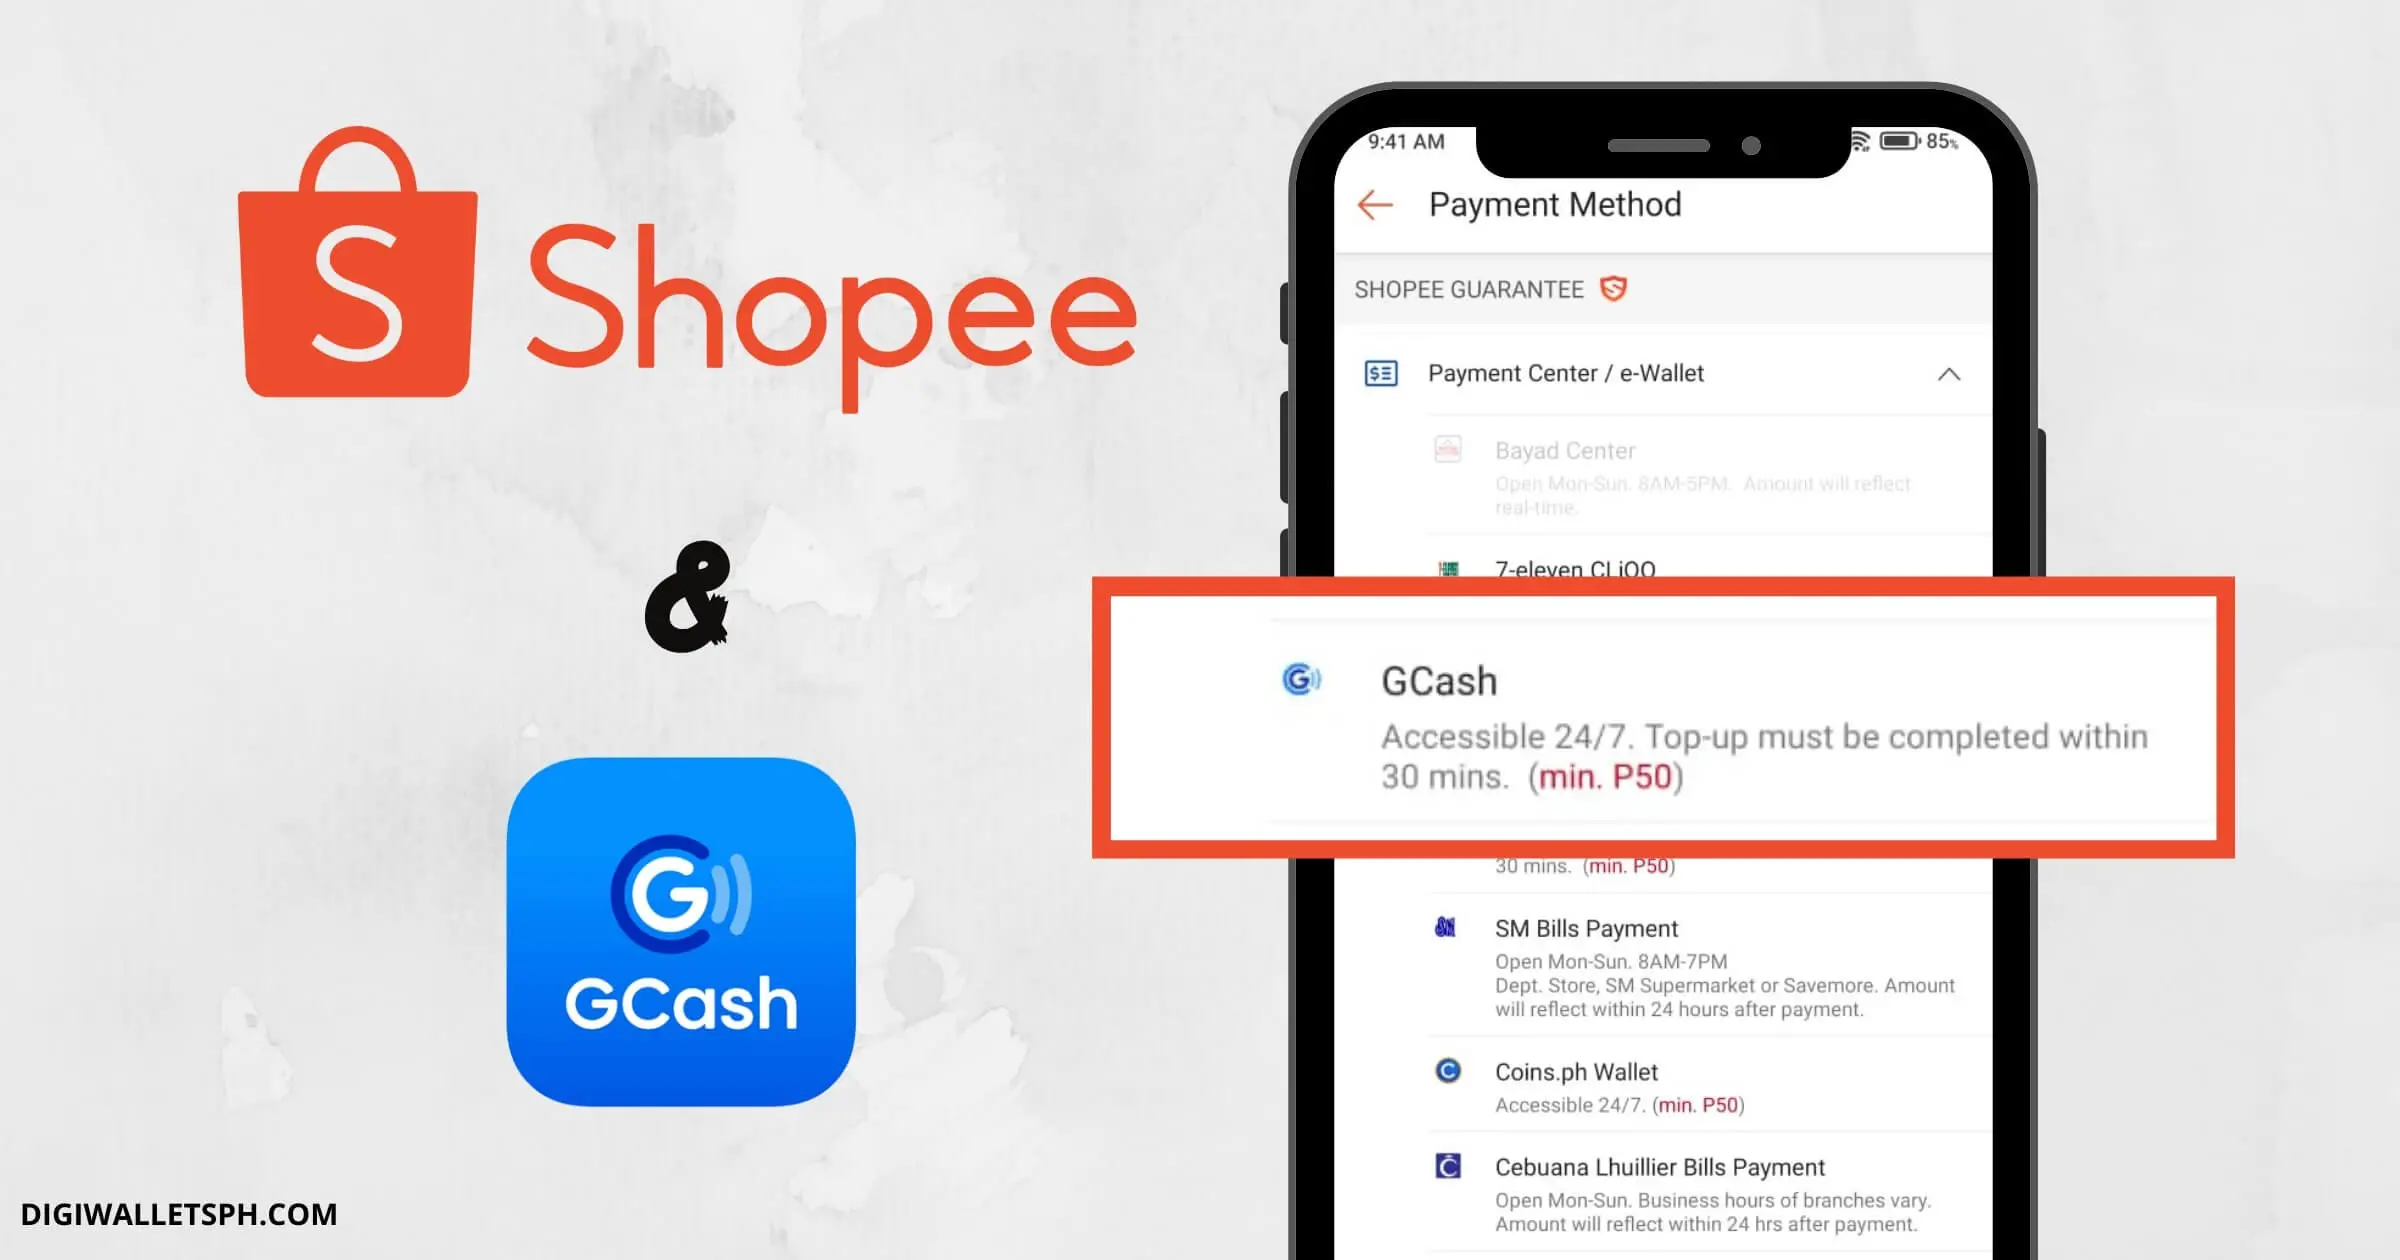 How to Pay Shopee using GCash